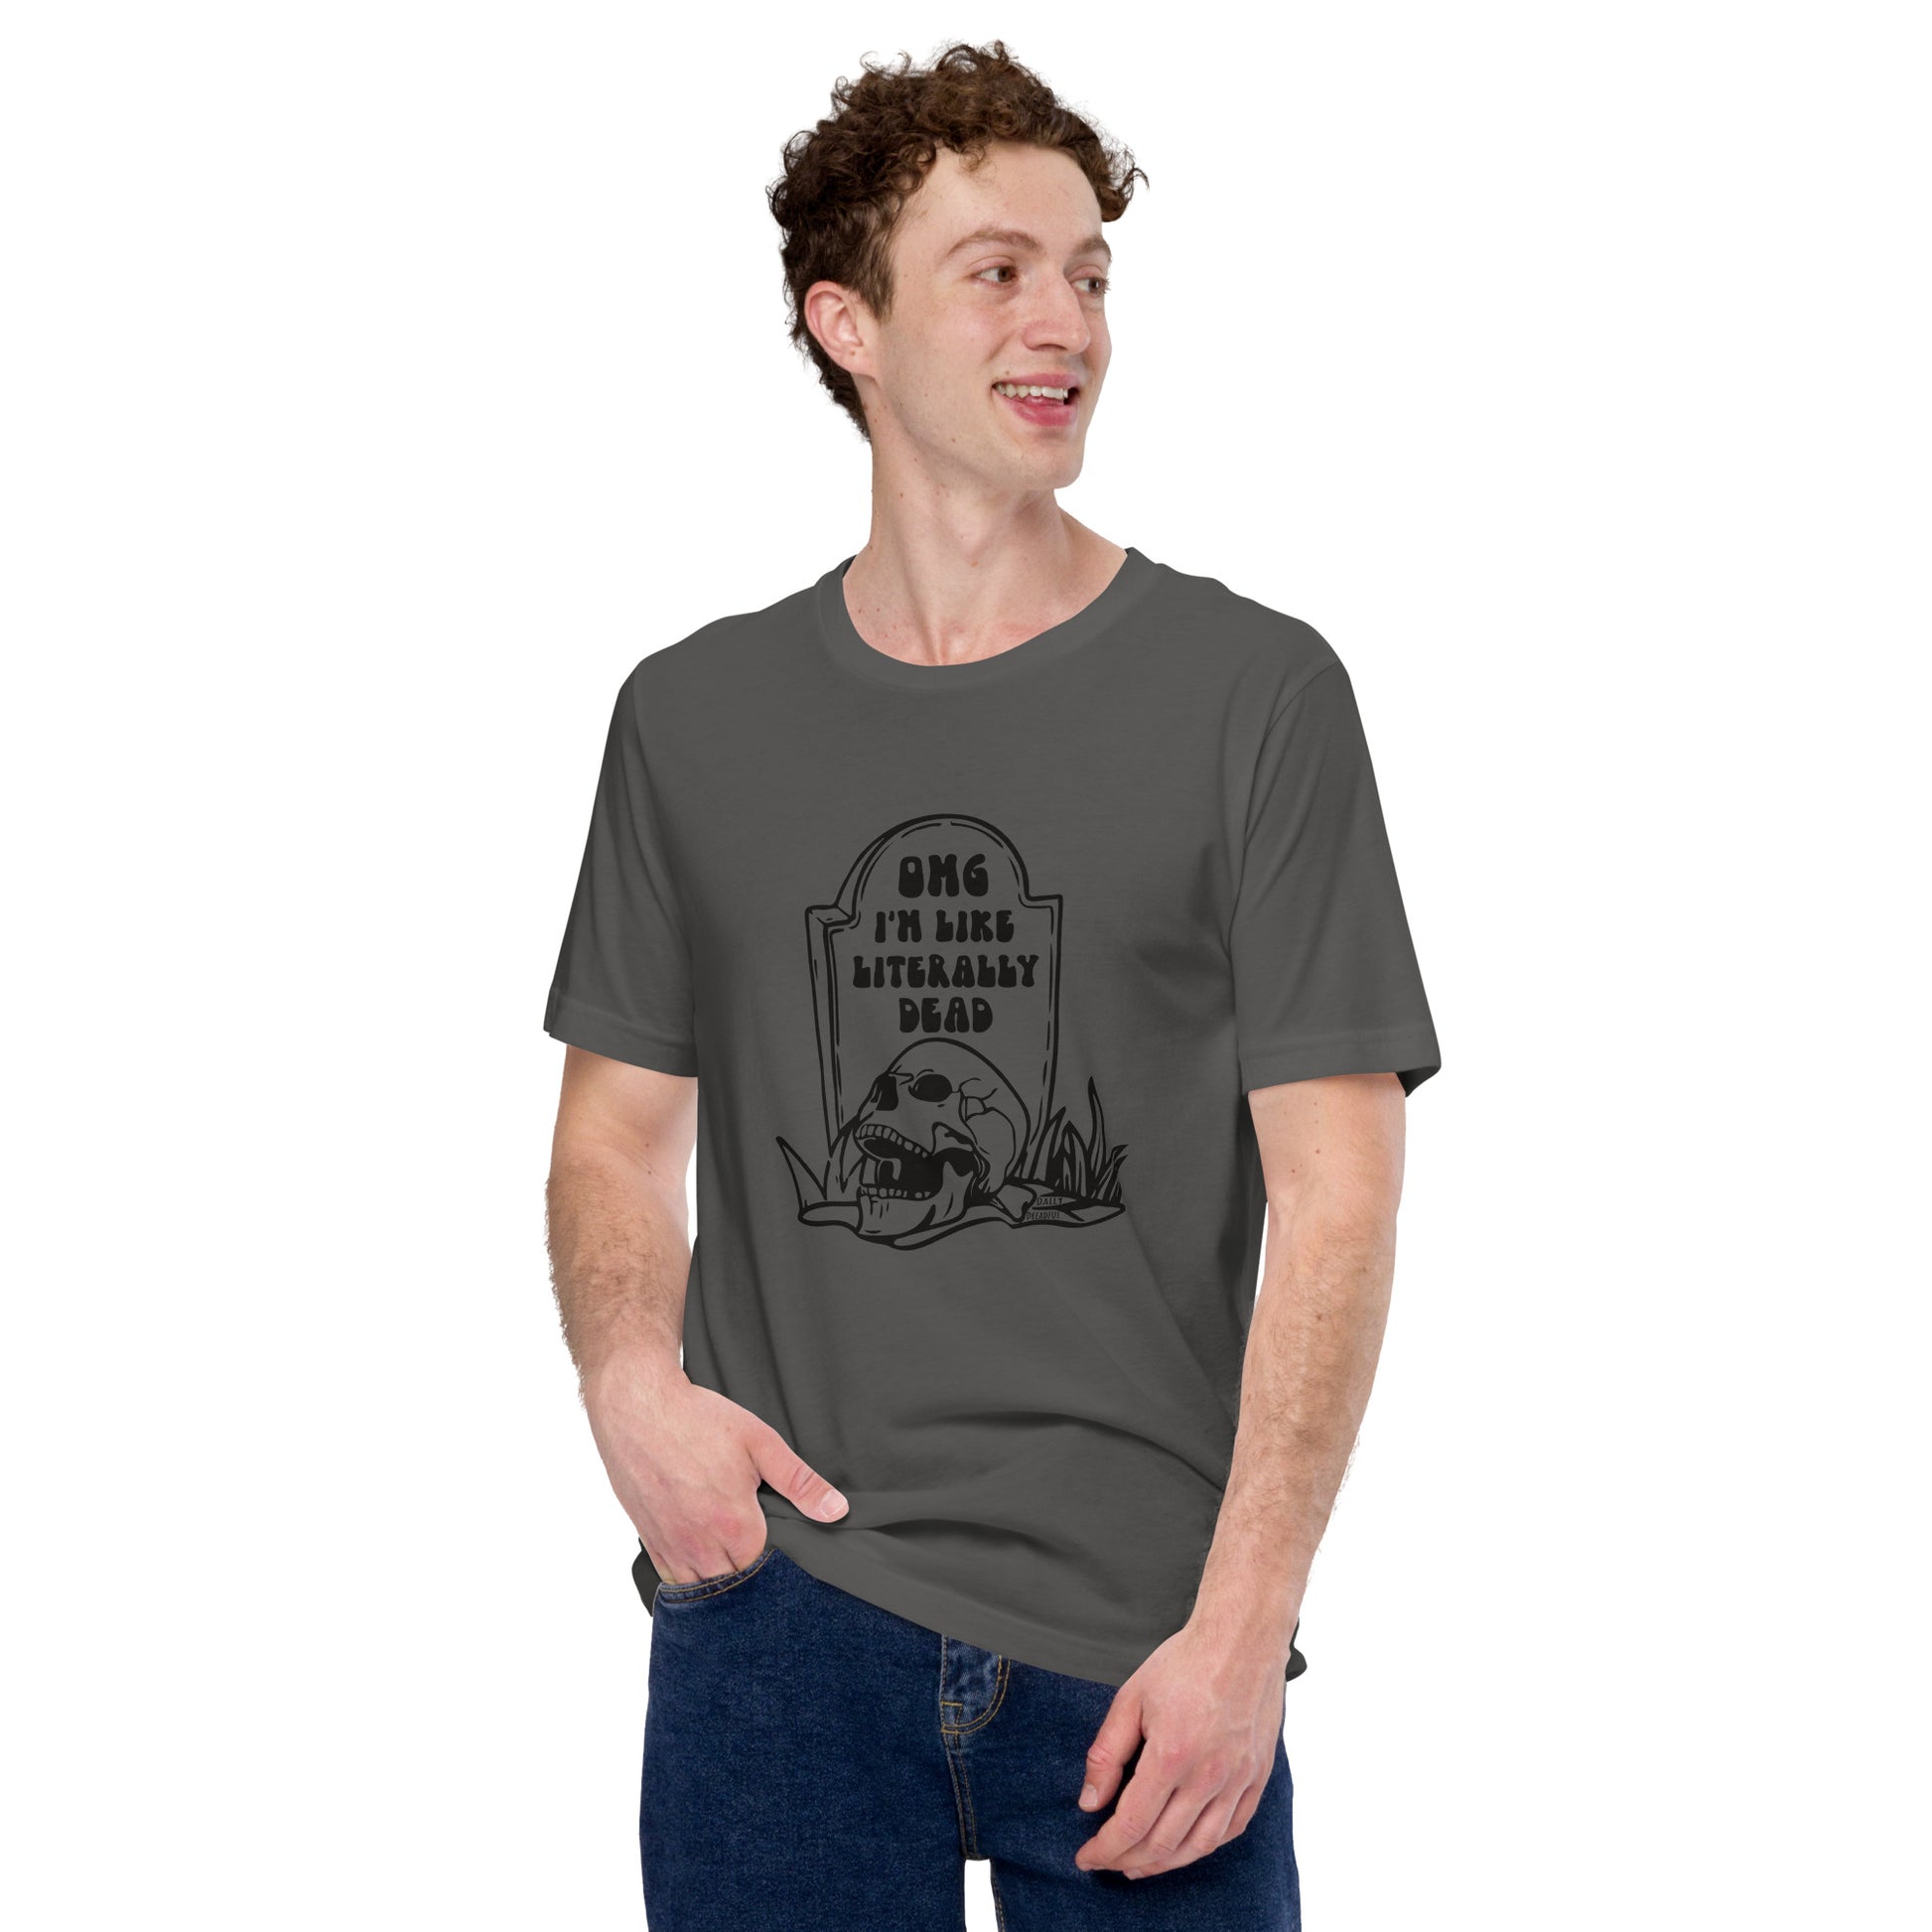 asphalt gray "OMG Dead" t-shirt, tee, tee shirt from Daily Dreadful